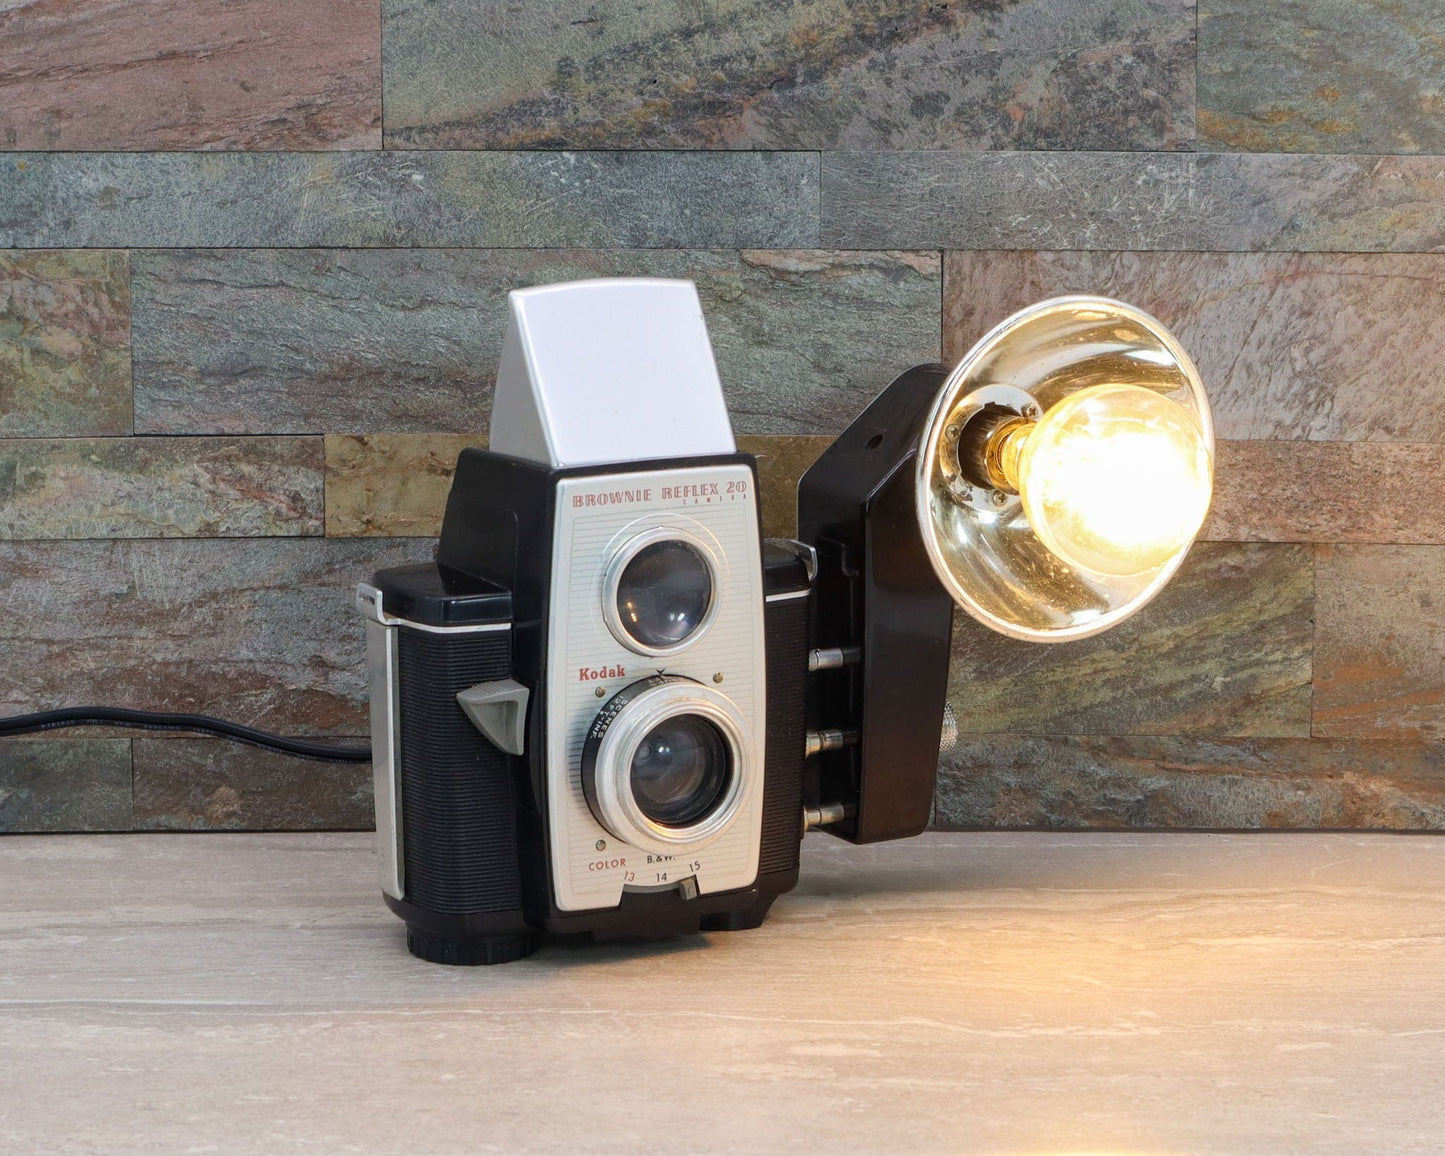 LightAndTimeArt Camera Lamp Reading Lamp - Kodak Brownie Reflex 20 Vintage Camera - Vintage Desk lamp - photographer gift